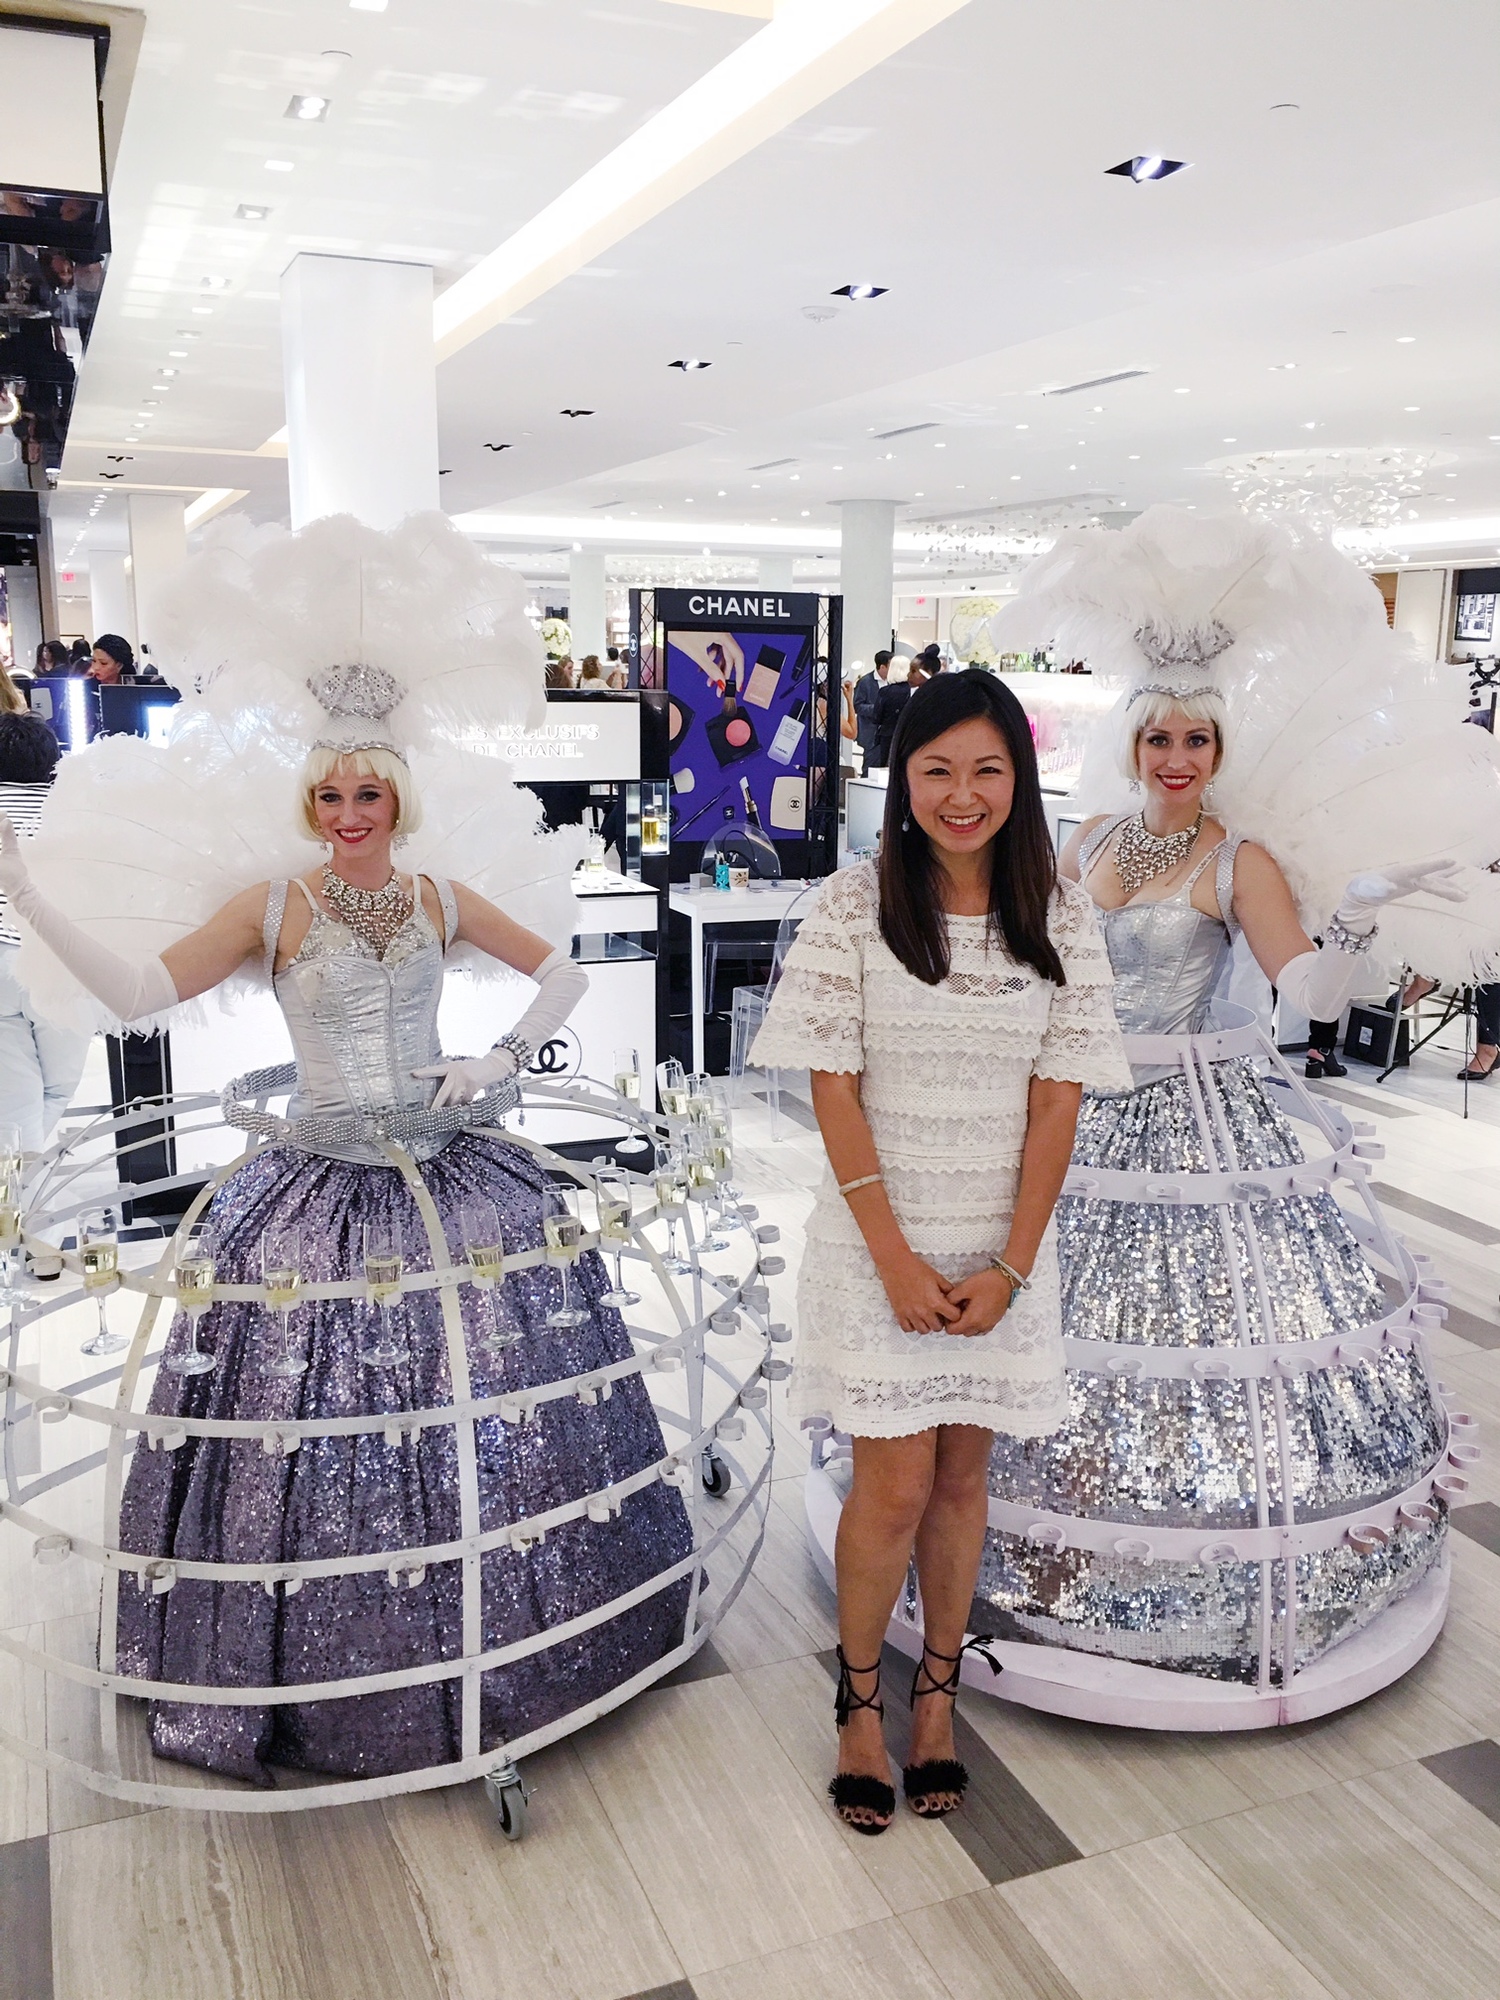 CHANEL Beauty Shop Opens Up @ Saks Fifth Avenue (San Francisco